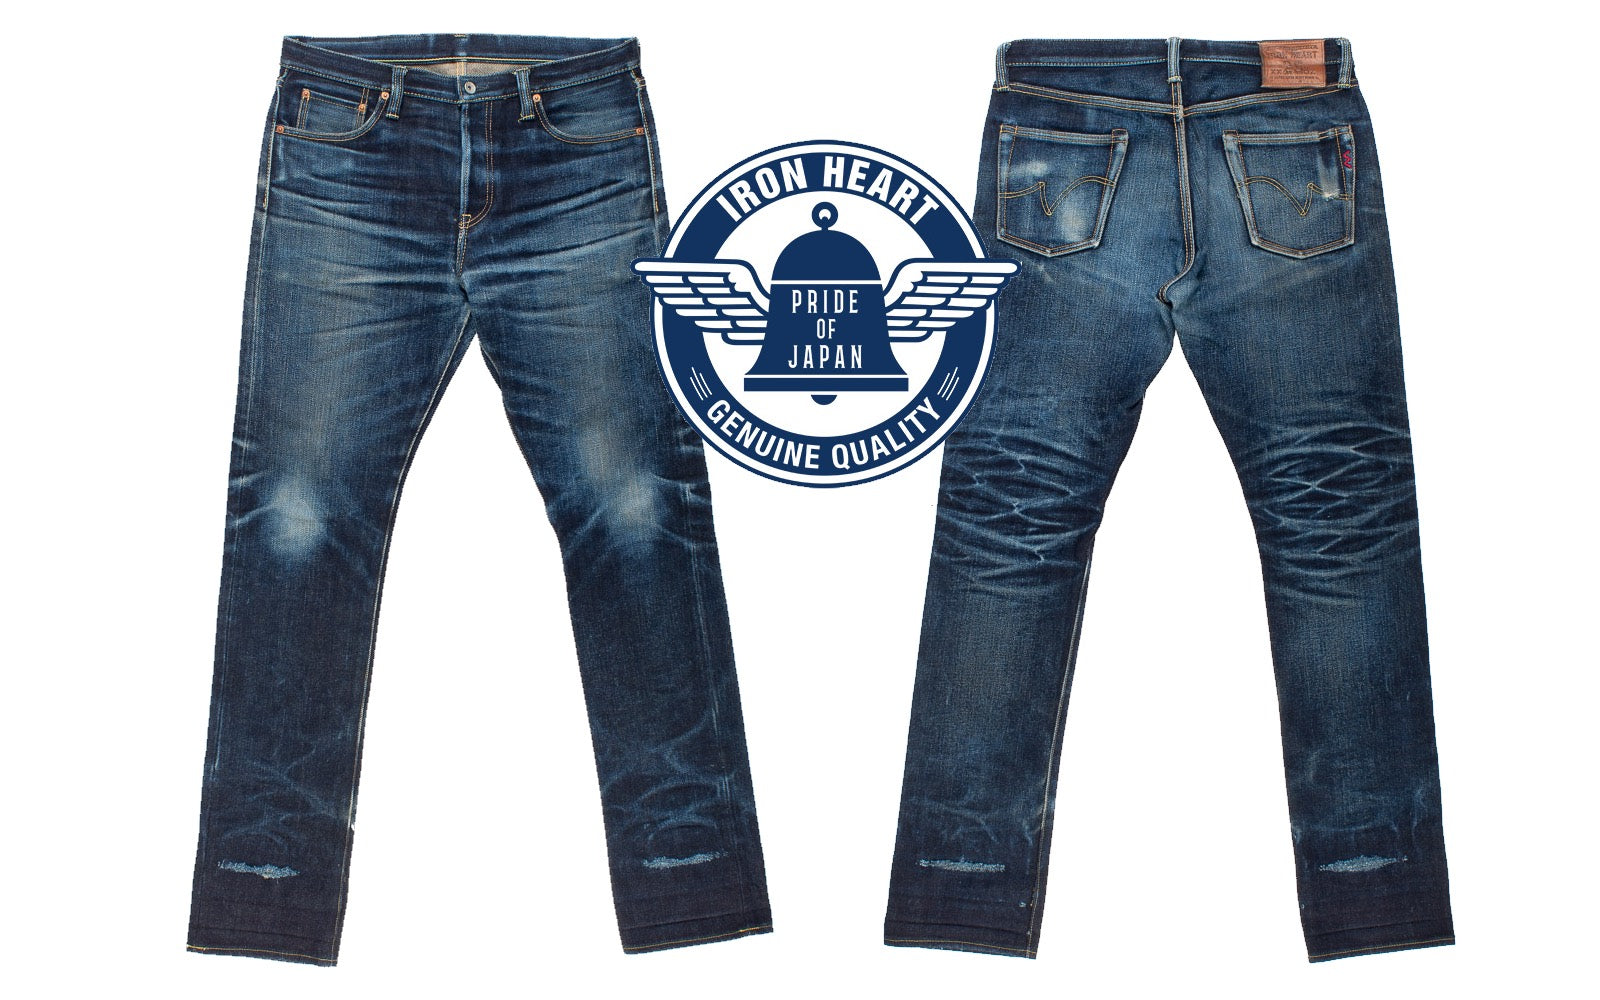 Nudie Jeans Tight Long John Saltwater Indigo - Mildblend Supply Co